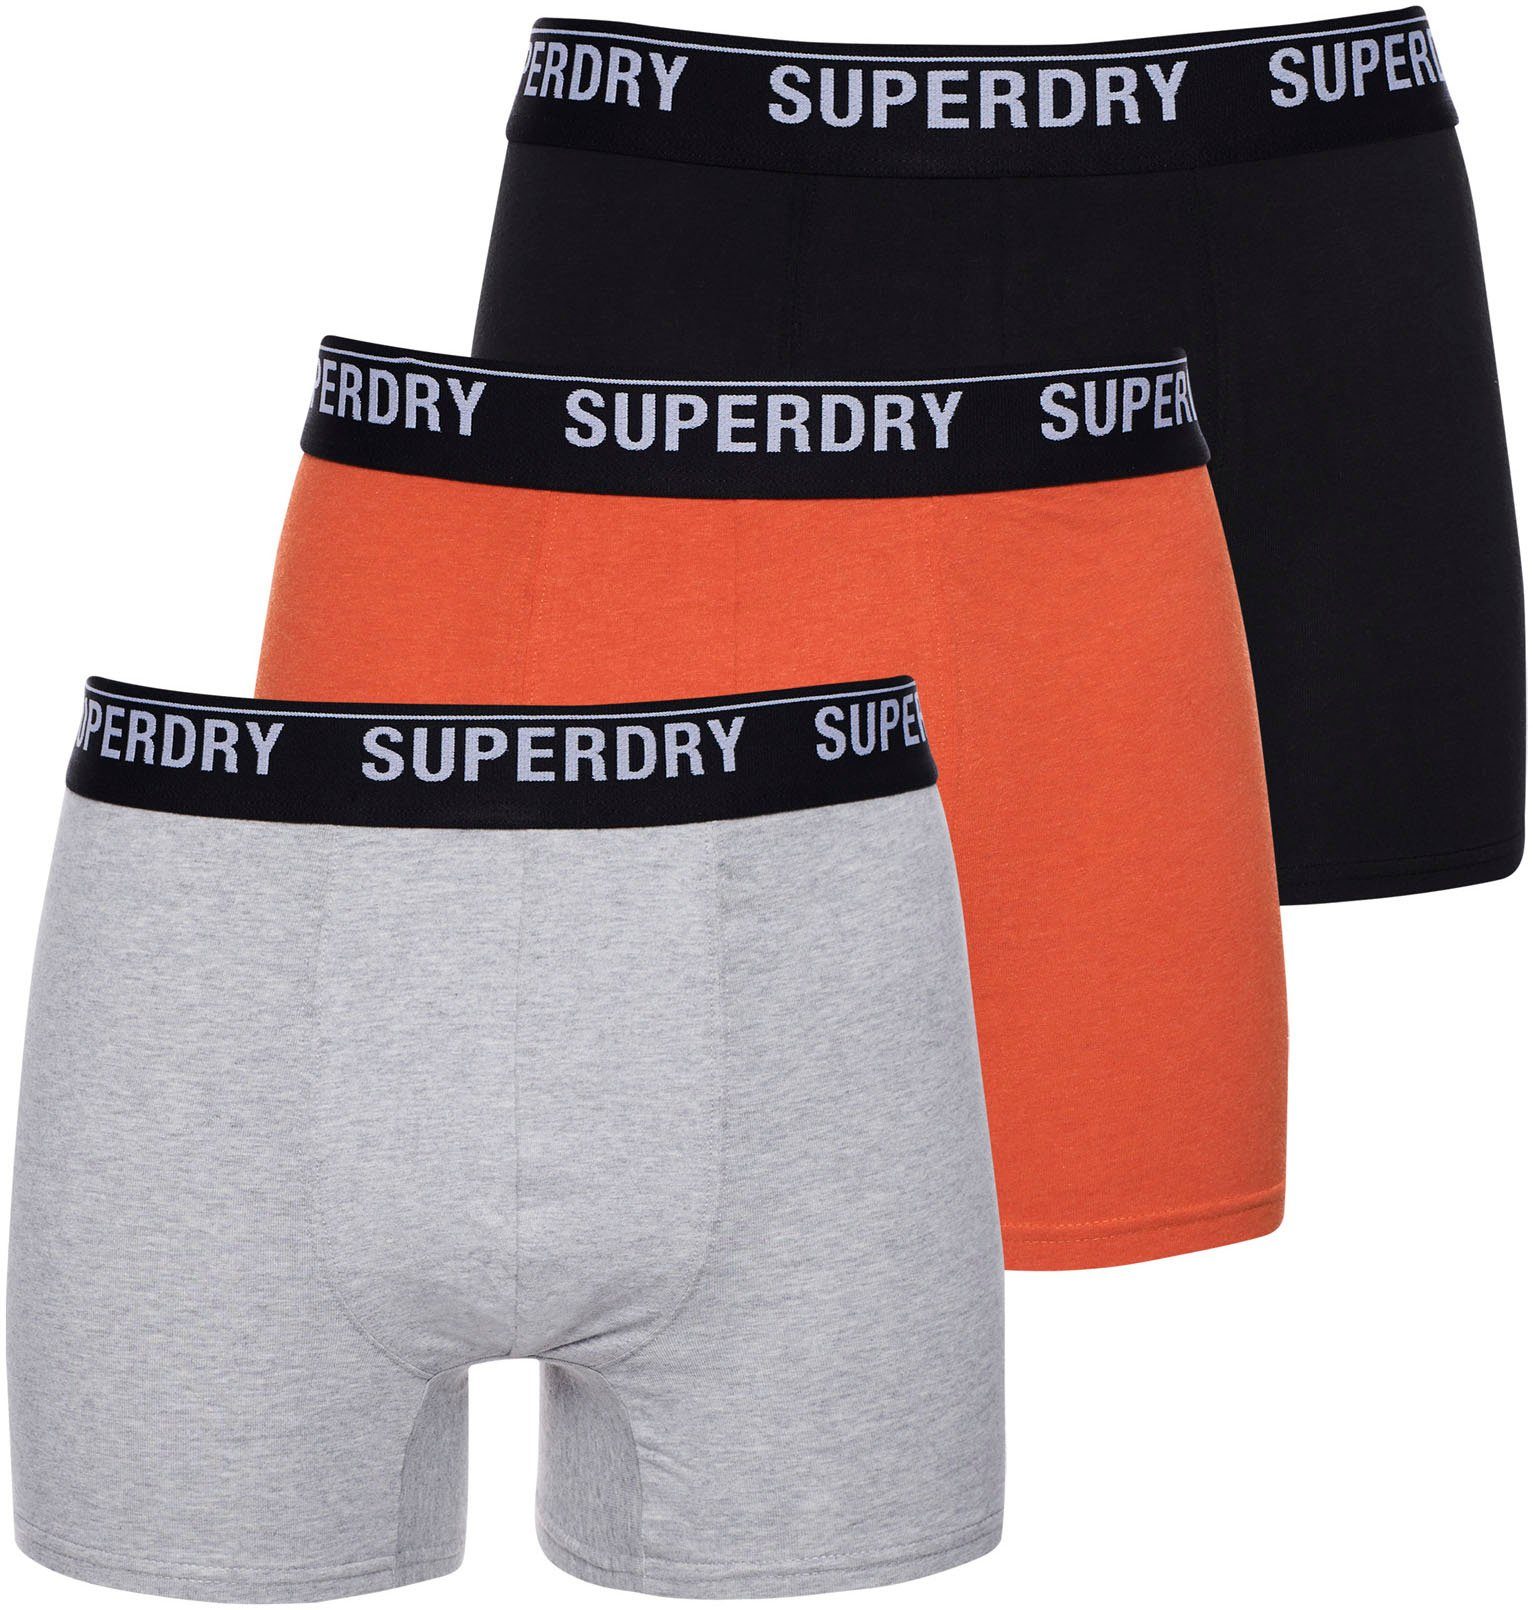 schwarz, orange, 3er-Pack) Boxer (3-St., grau Langer Logo web SD Superdry Boxer Webbund mit 3x wb lg